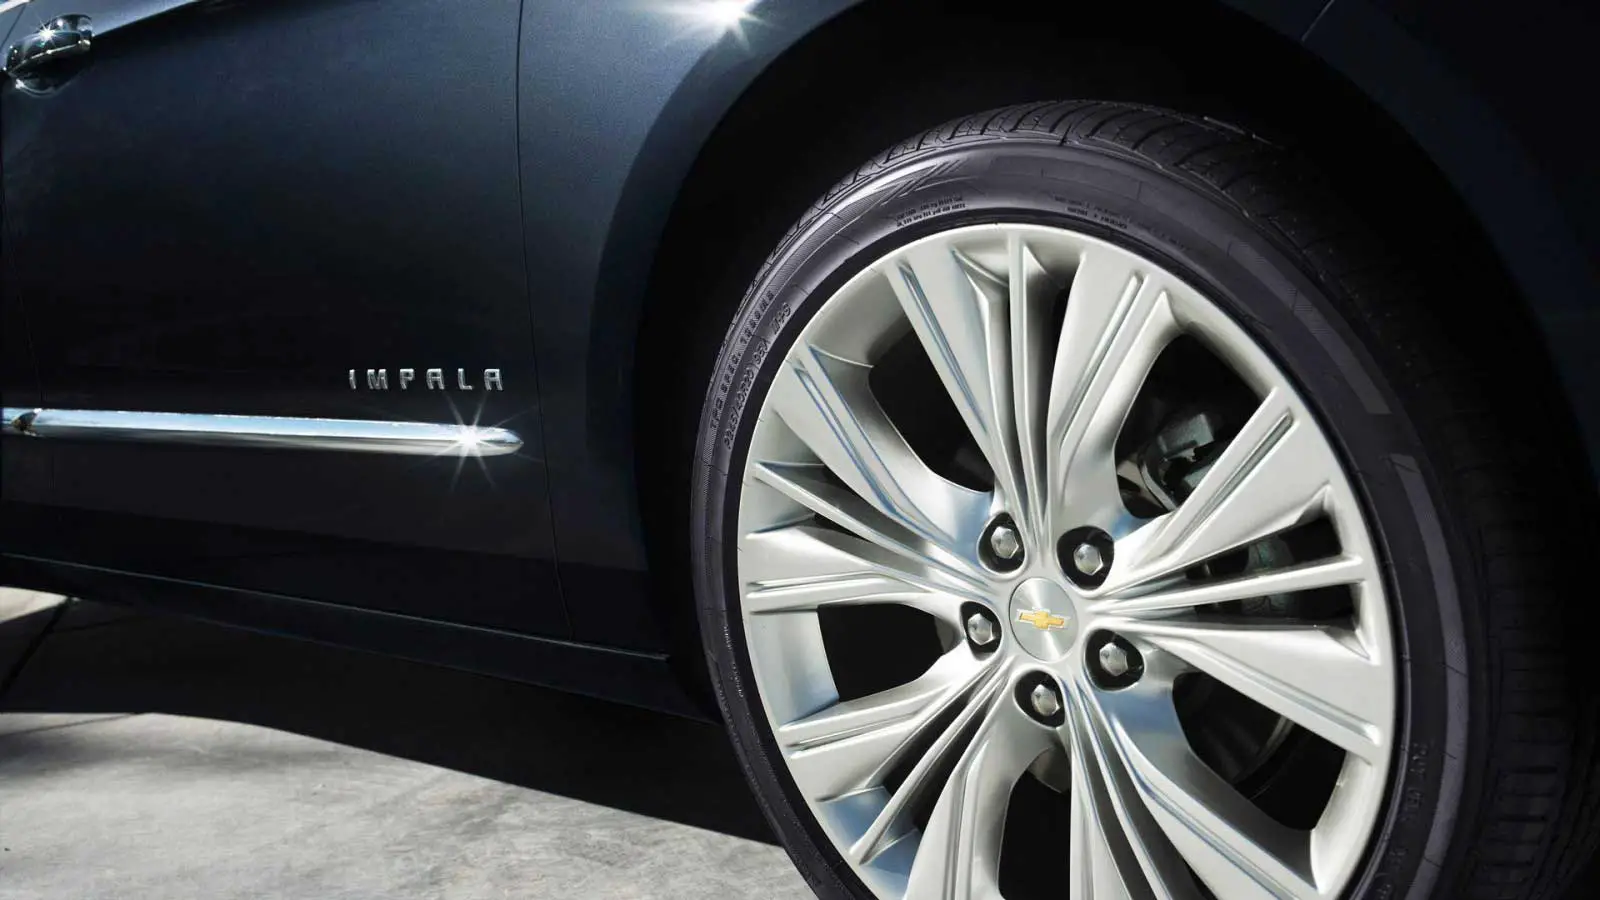 Chevrolet Impala 1LT Exterior wheel